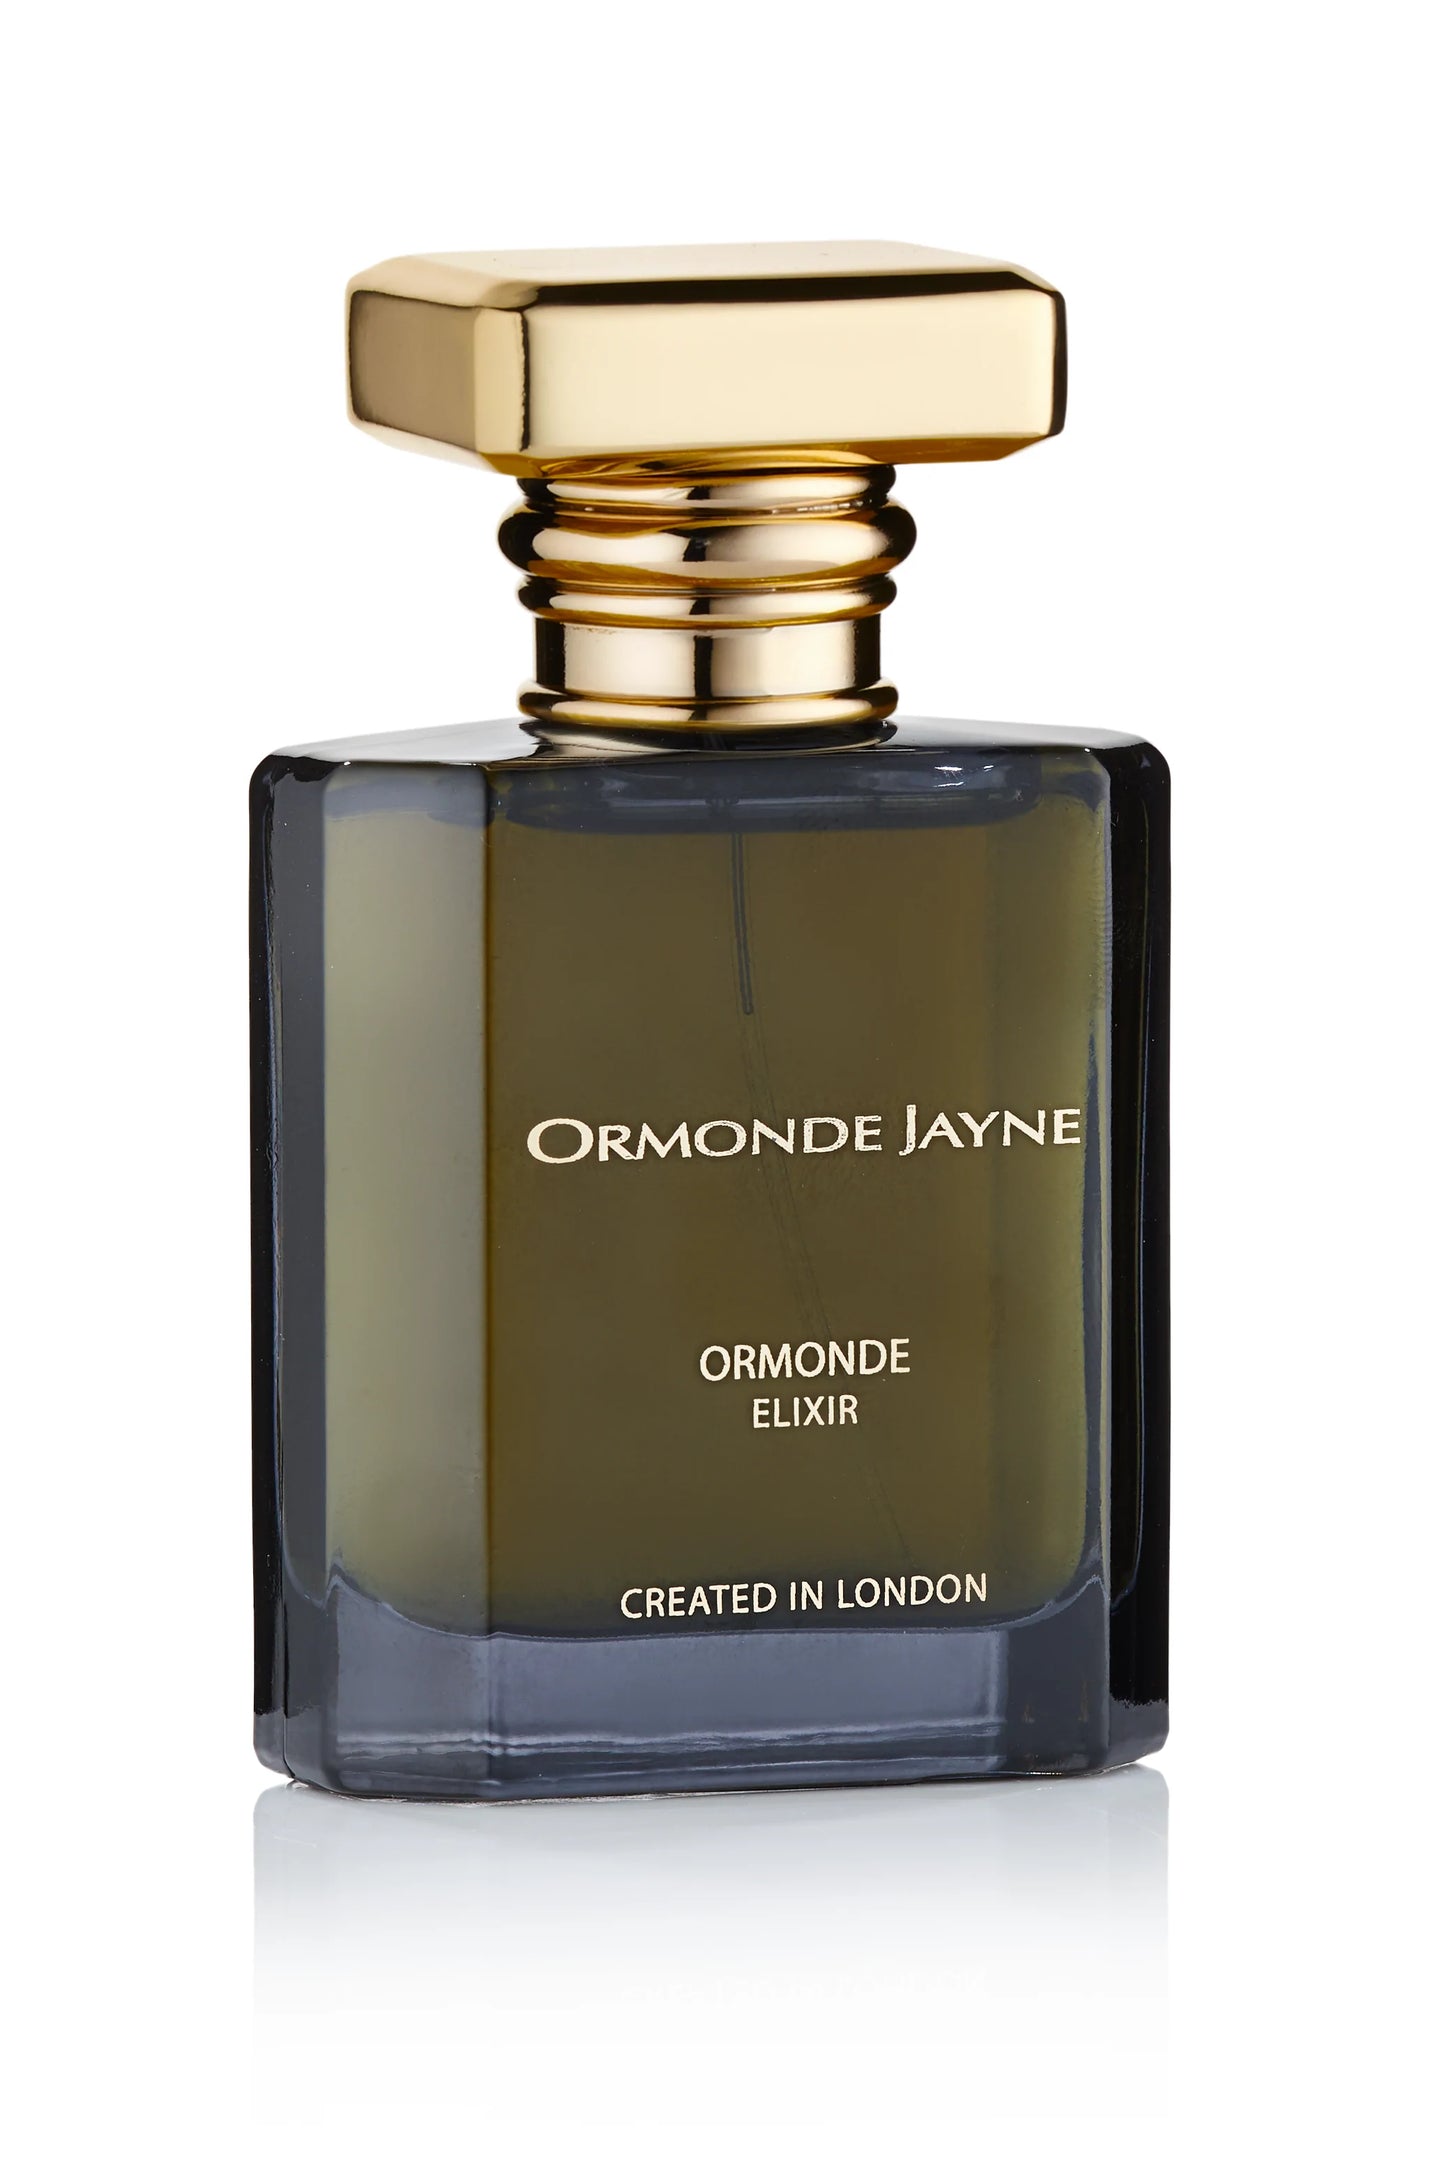 Ormonde Jayne Ormonde Elixír 2ml 0.06 fl. oz oficiálna vzorka vône